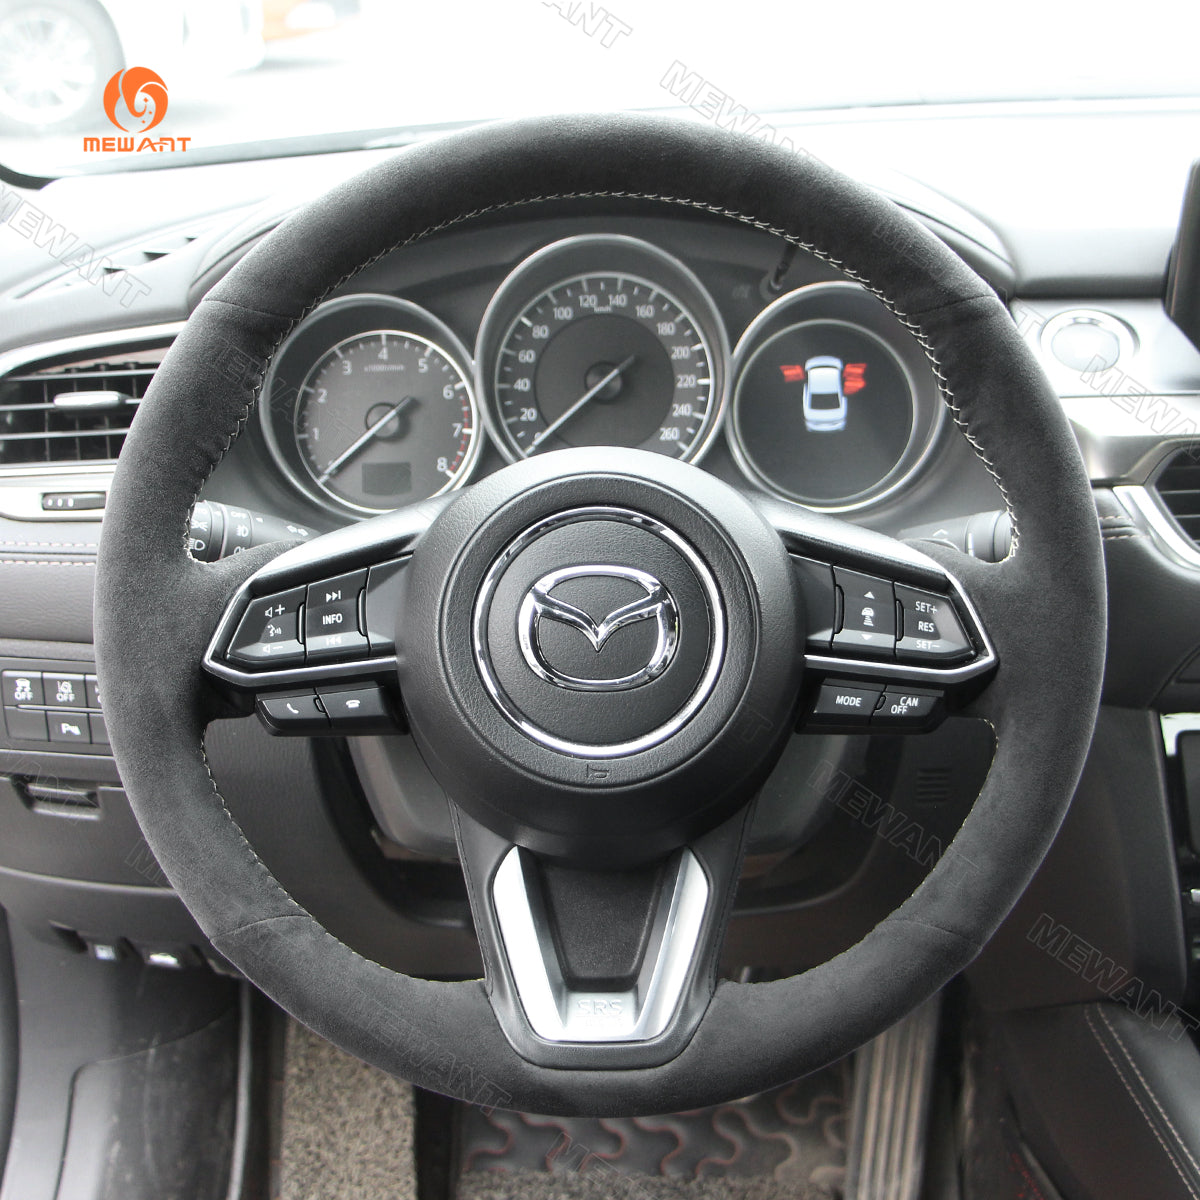 MEWANNT Hand Stitch Car Steering Wheel Cover for Mazda 3 Axela / Mazda 6 Atenza / CX-3 / CX-5 / CX-9 / for Toyota Yaris